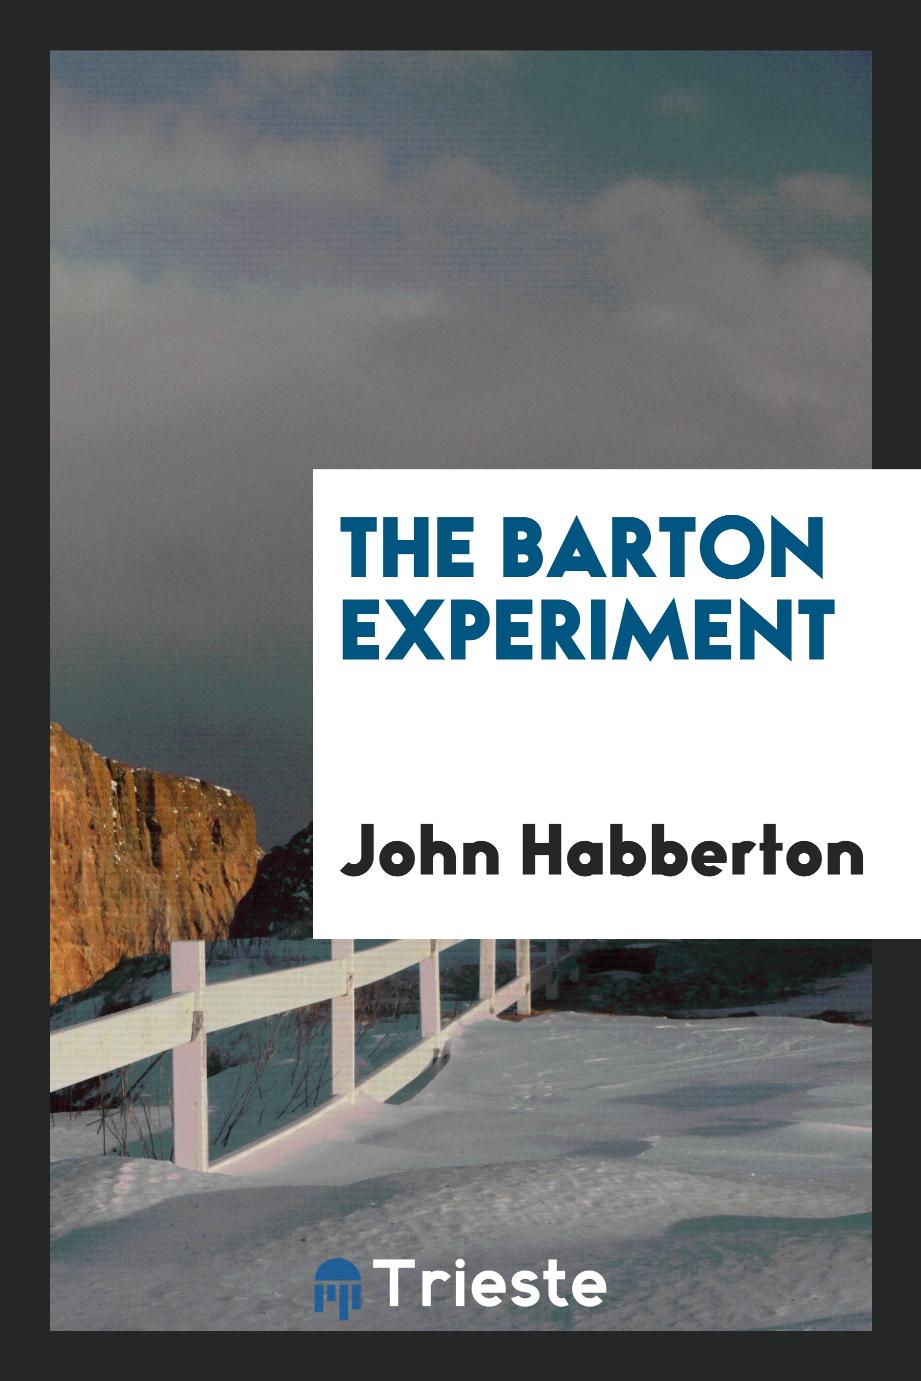 The Barton experiment